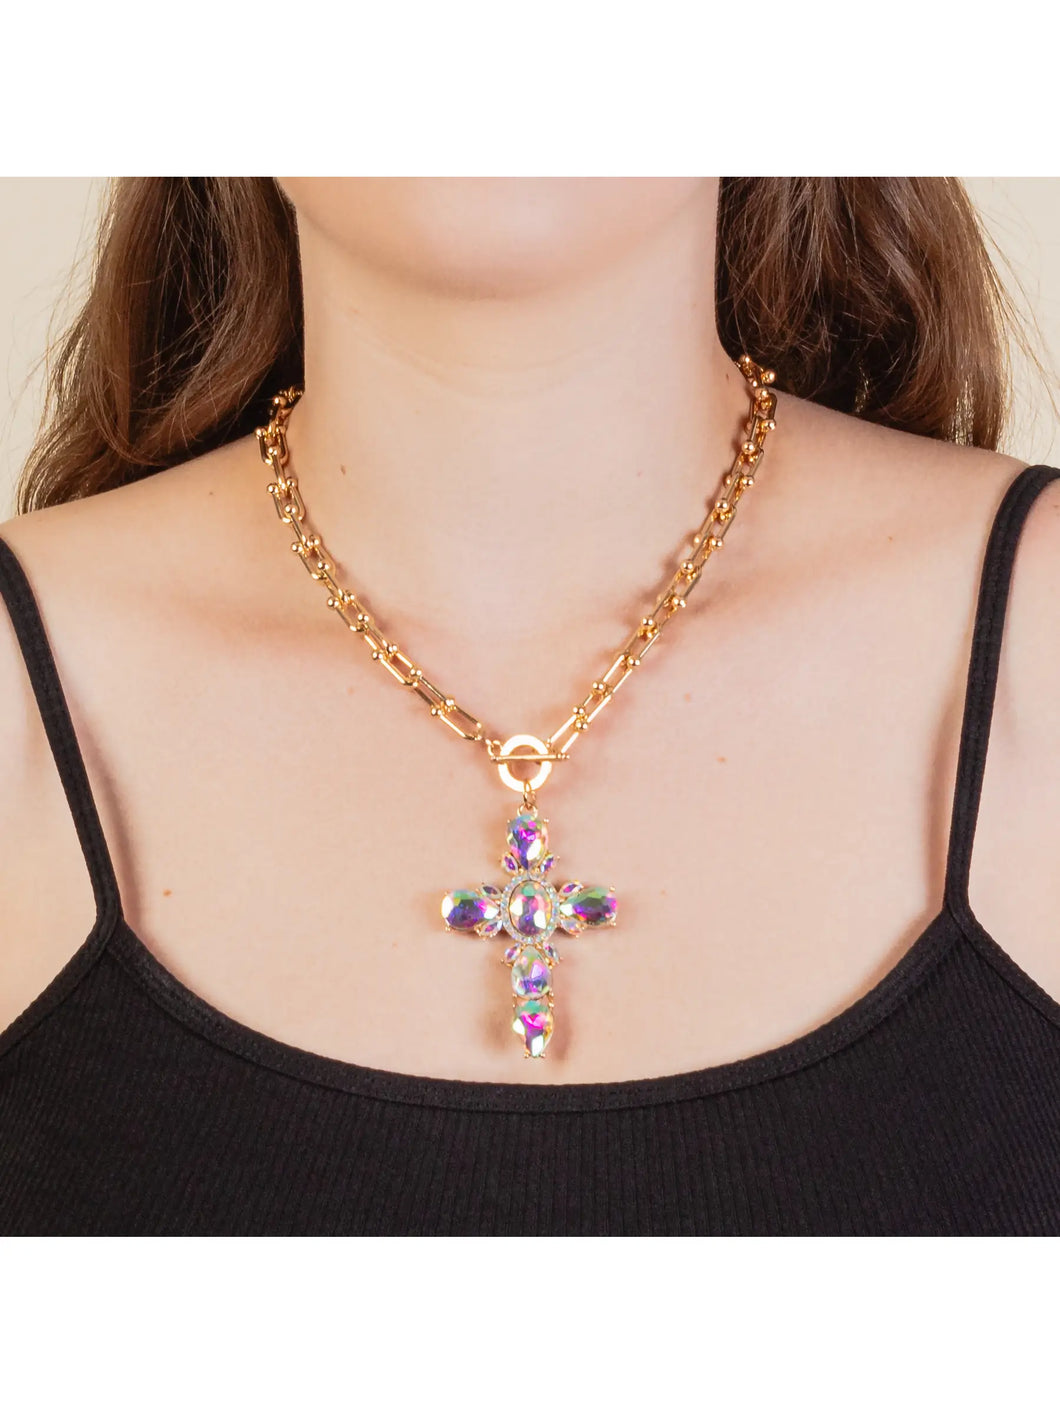 Iridescent rhinestone cross necklace